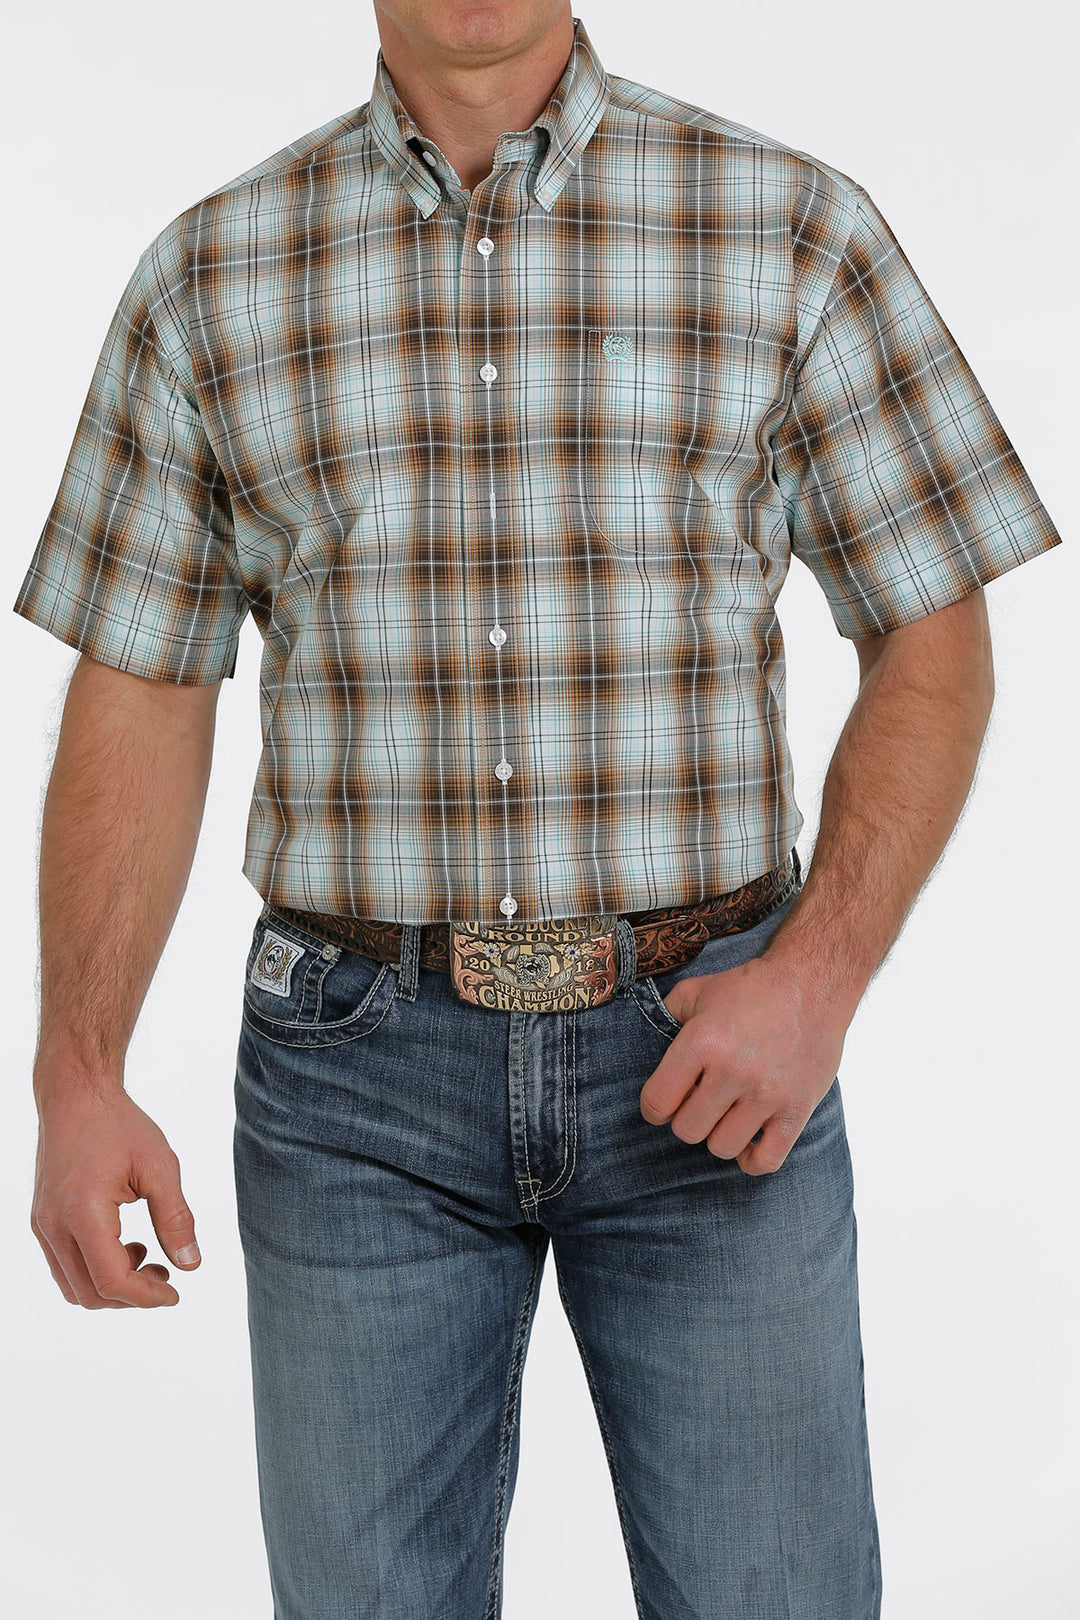 Cinch Men's Brown Plaid Short Sleeve Shirt